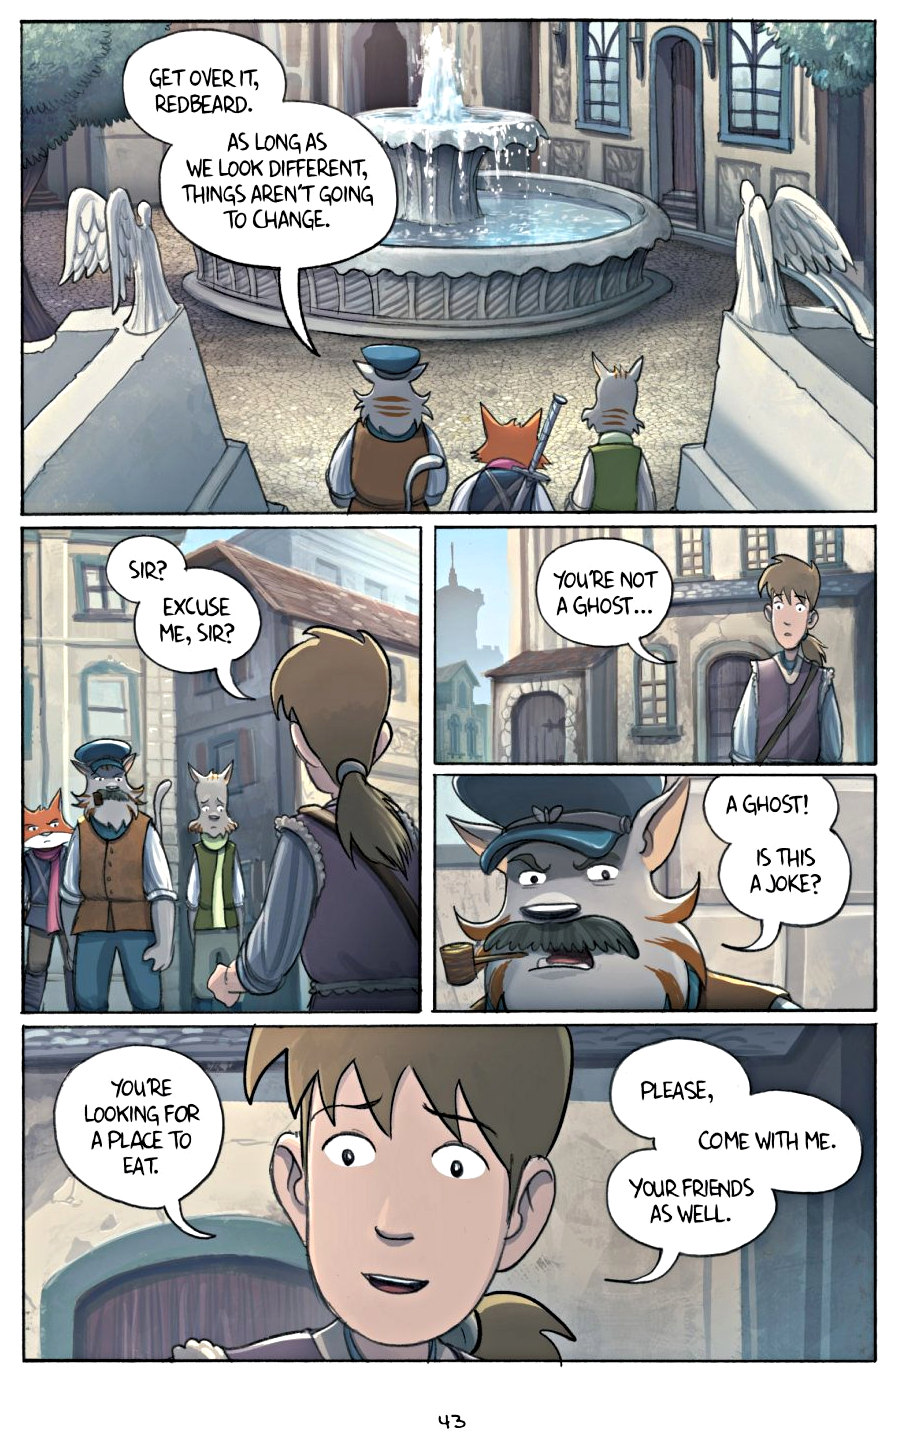 page 43 of amulet 4 last council graphic novel by kazu kibuishi